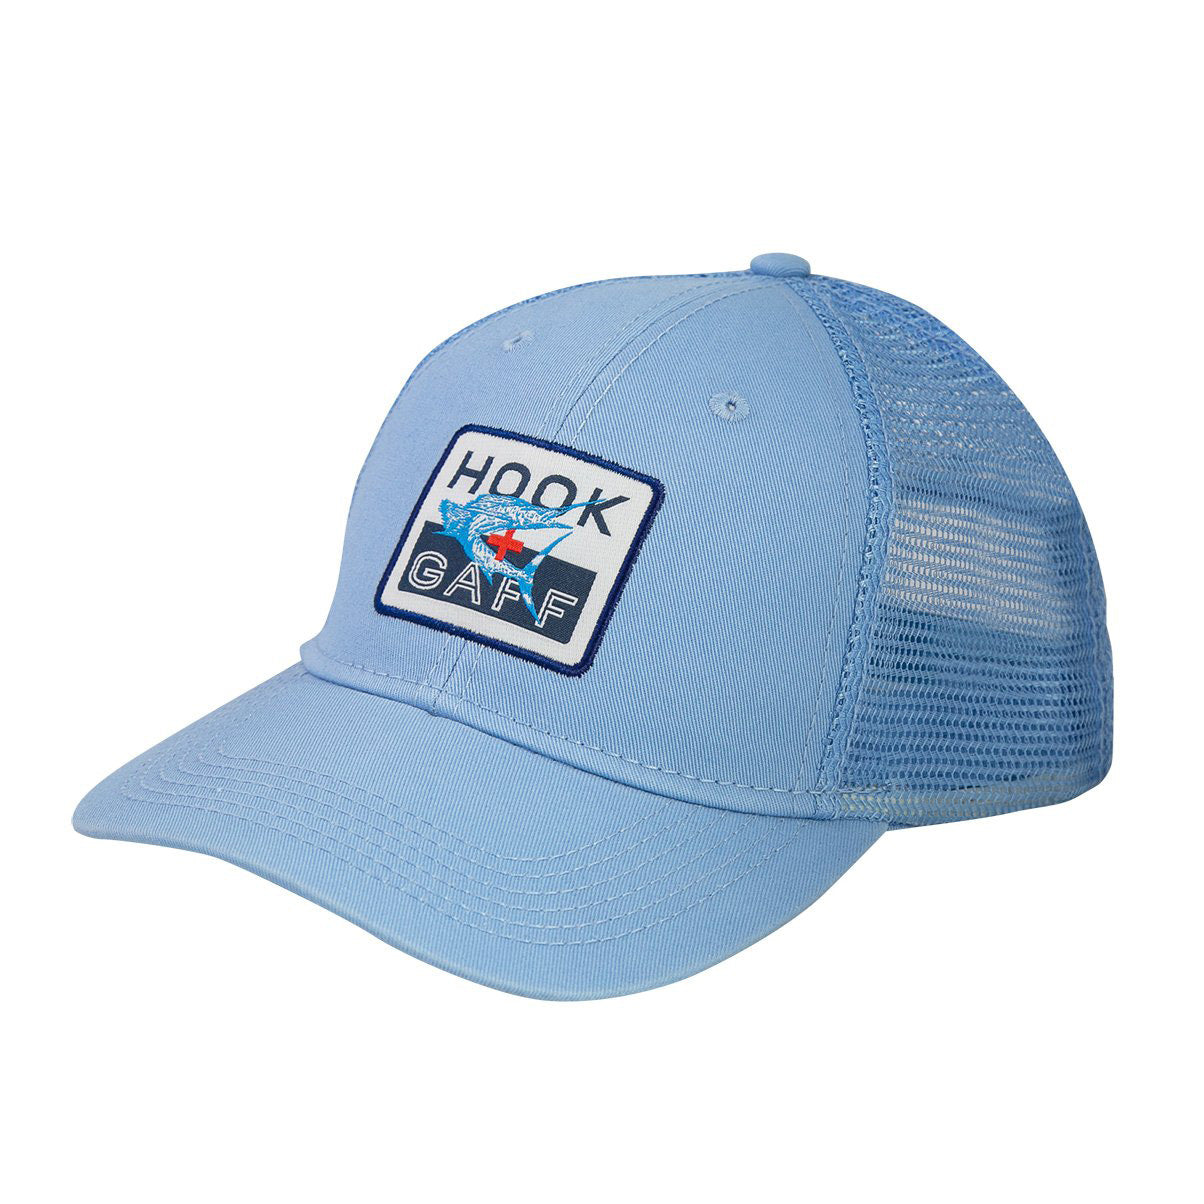 Sailfish Patch Hat – Hook+Gaff